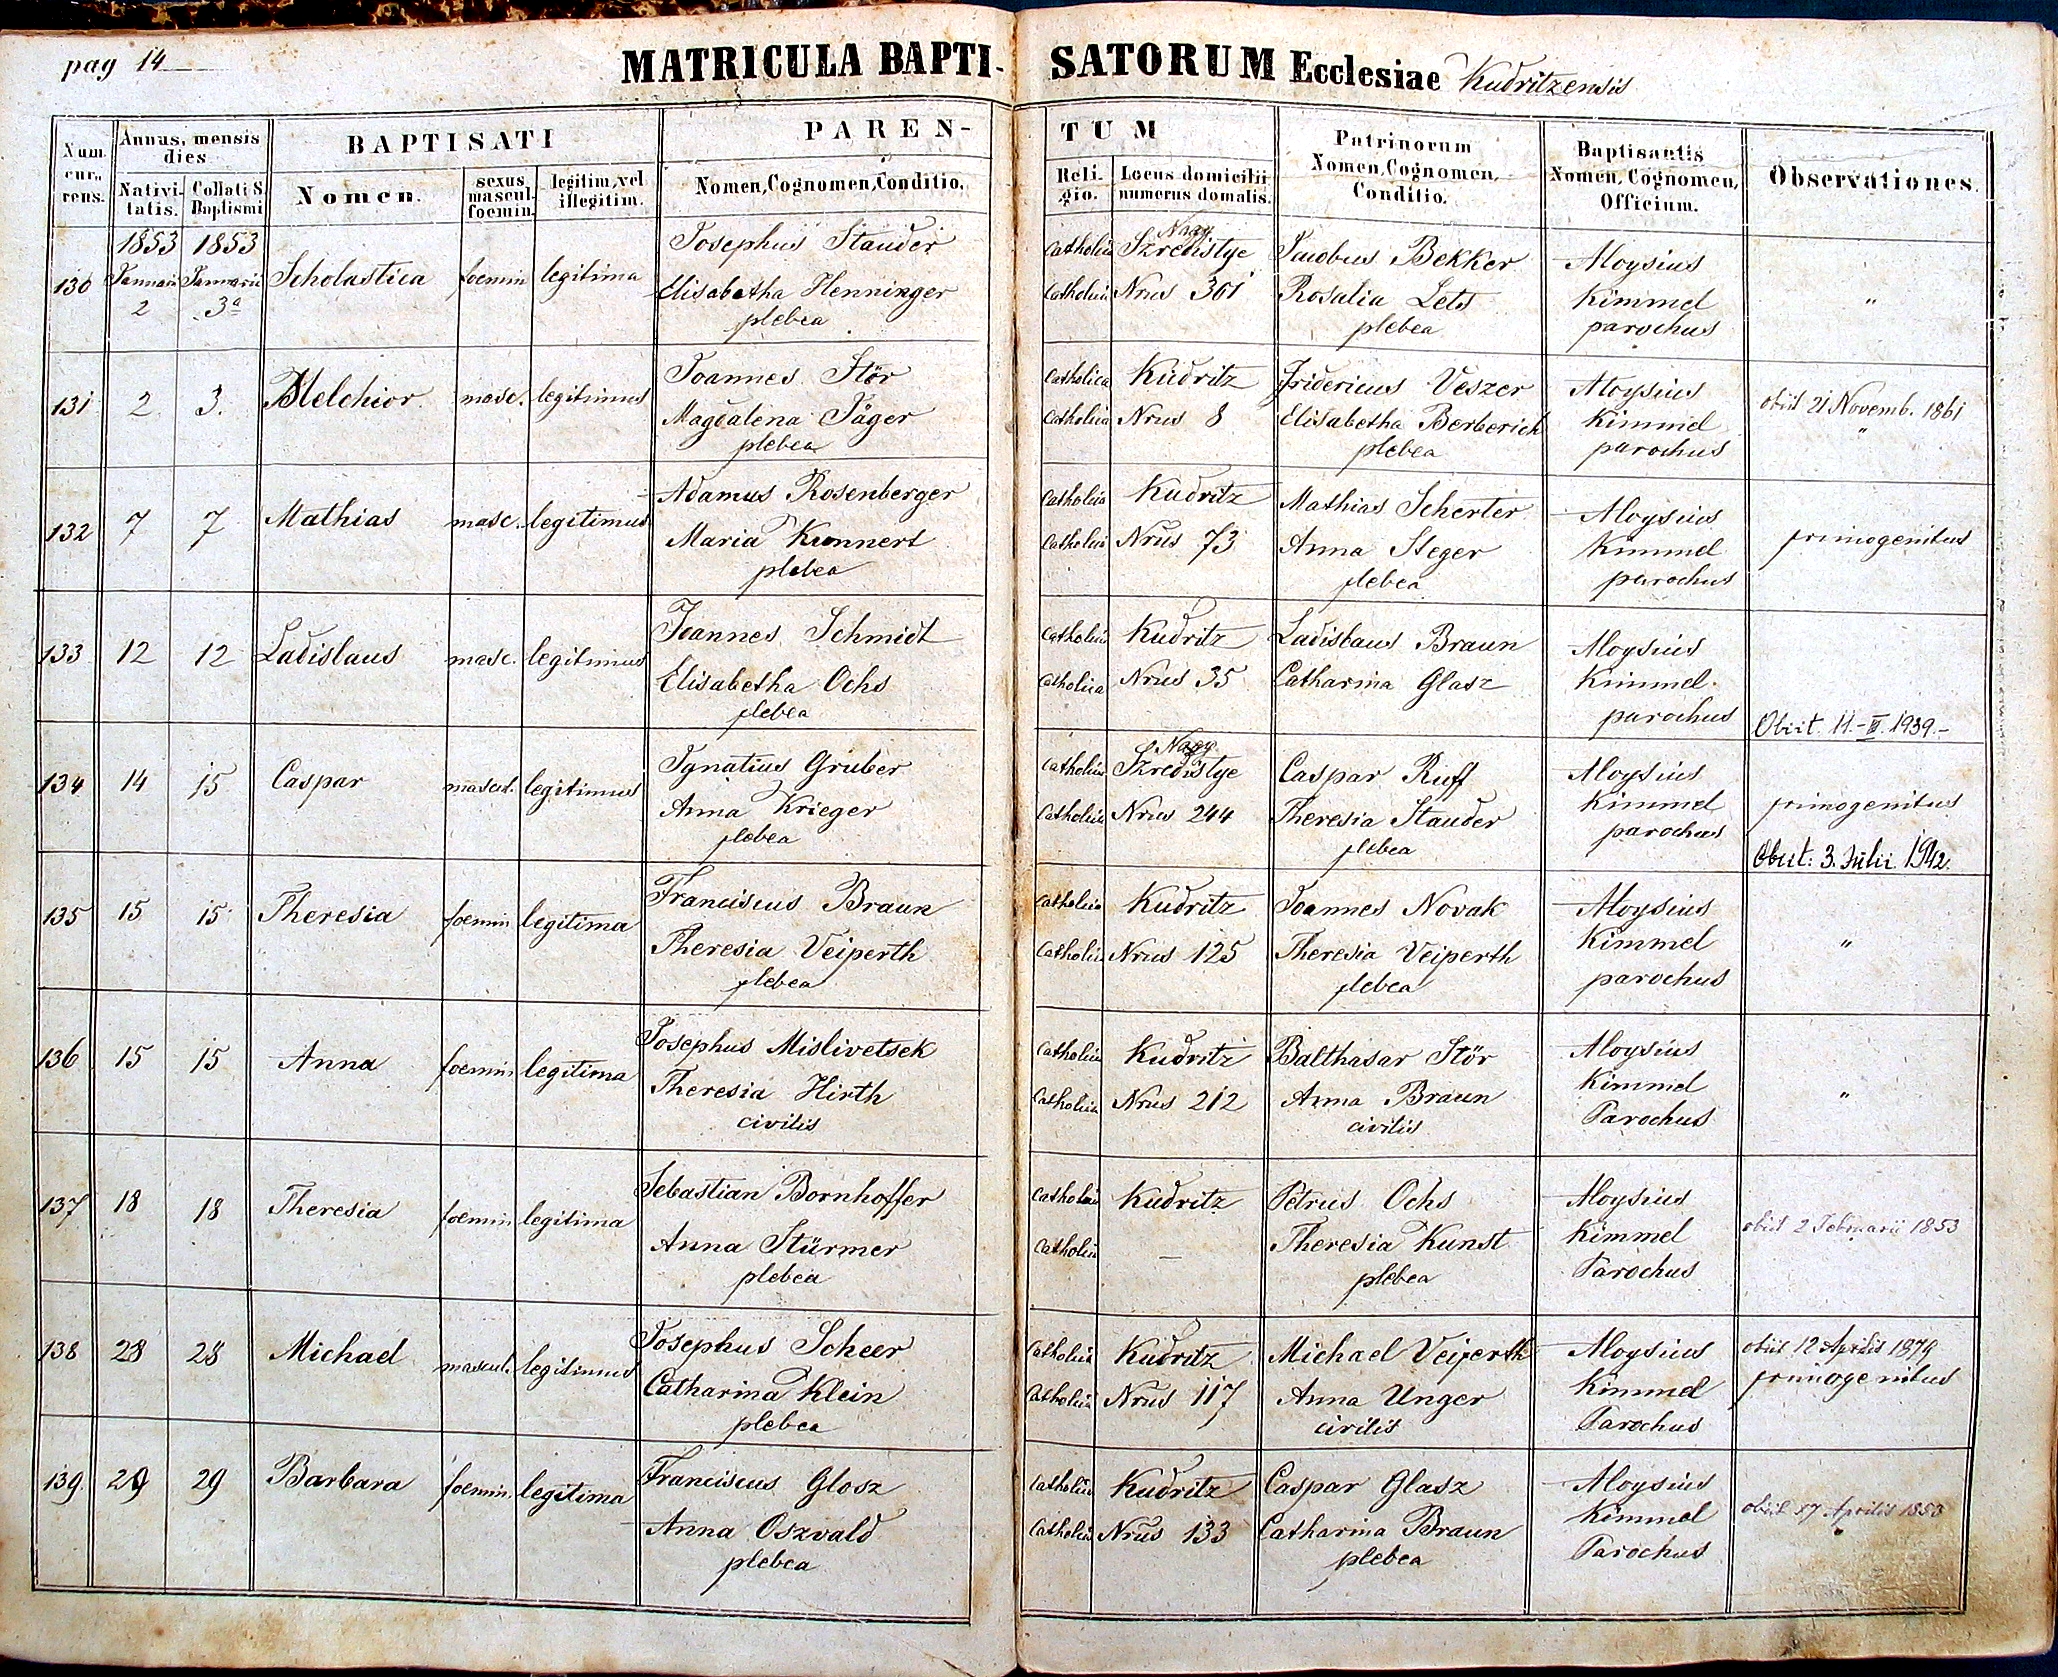 images/church_records/BIRTHS/1852-1870B/014